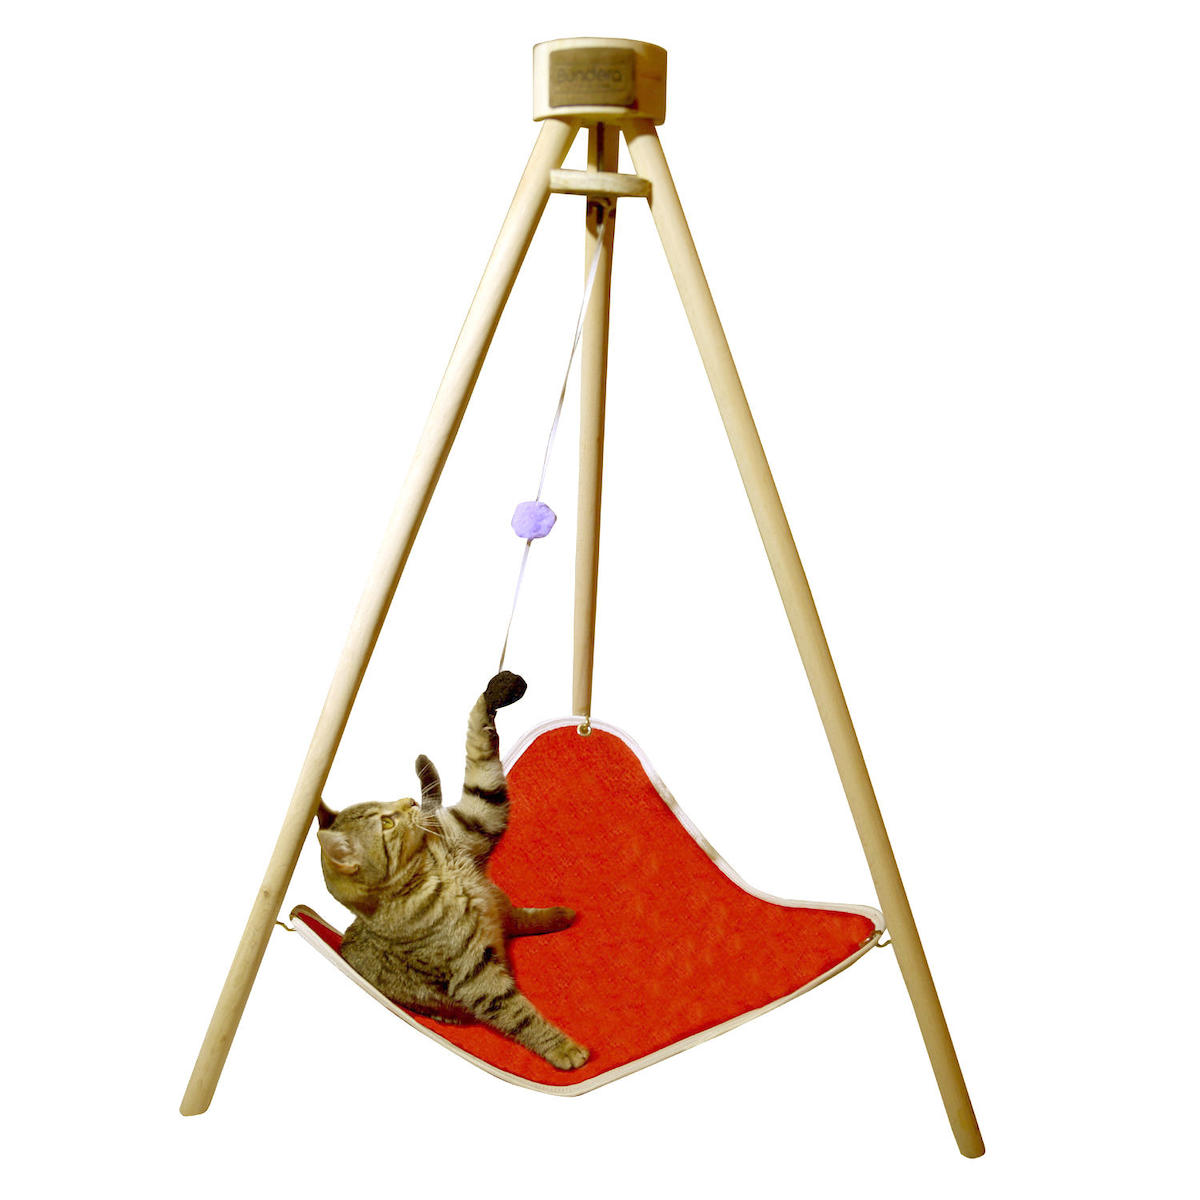 Bundera Piramit Küçük Irk Köpek Yatağı Kırmızı